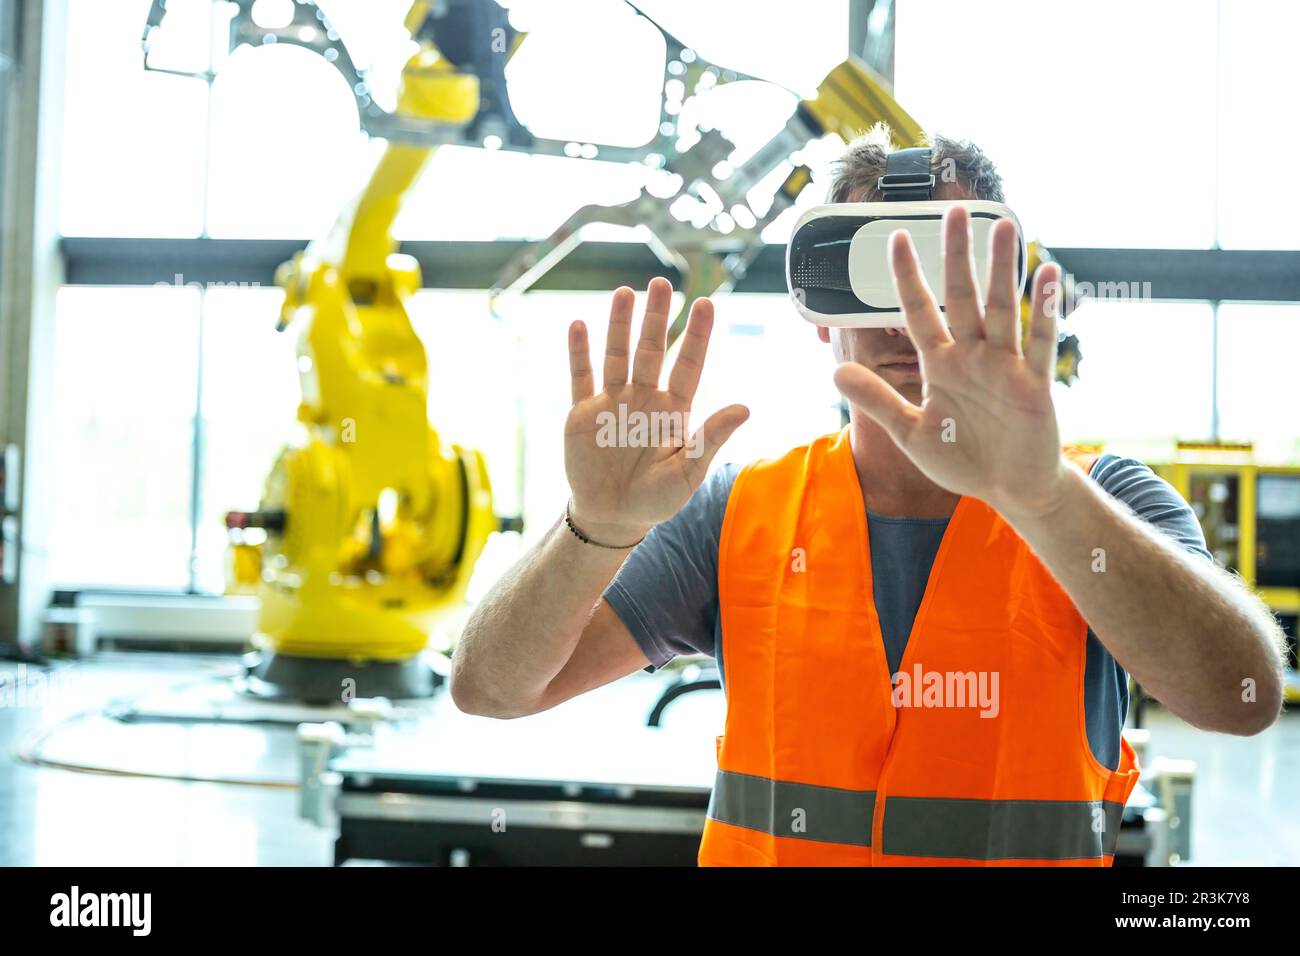 Industrial Robots Remote Control AR Stock Photo